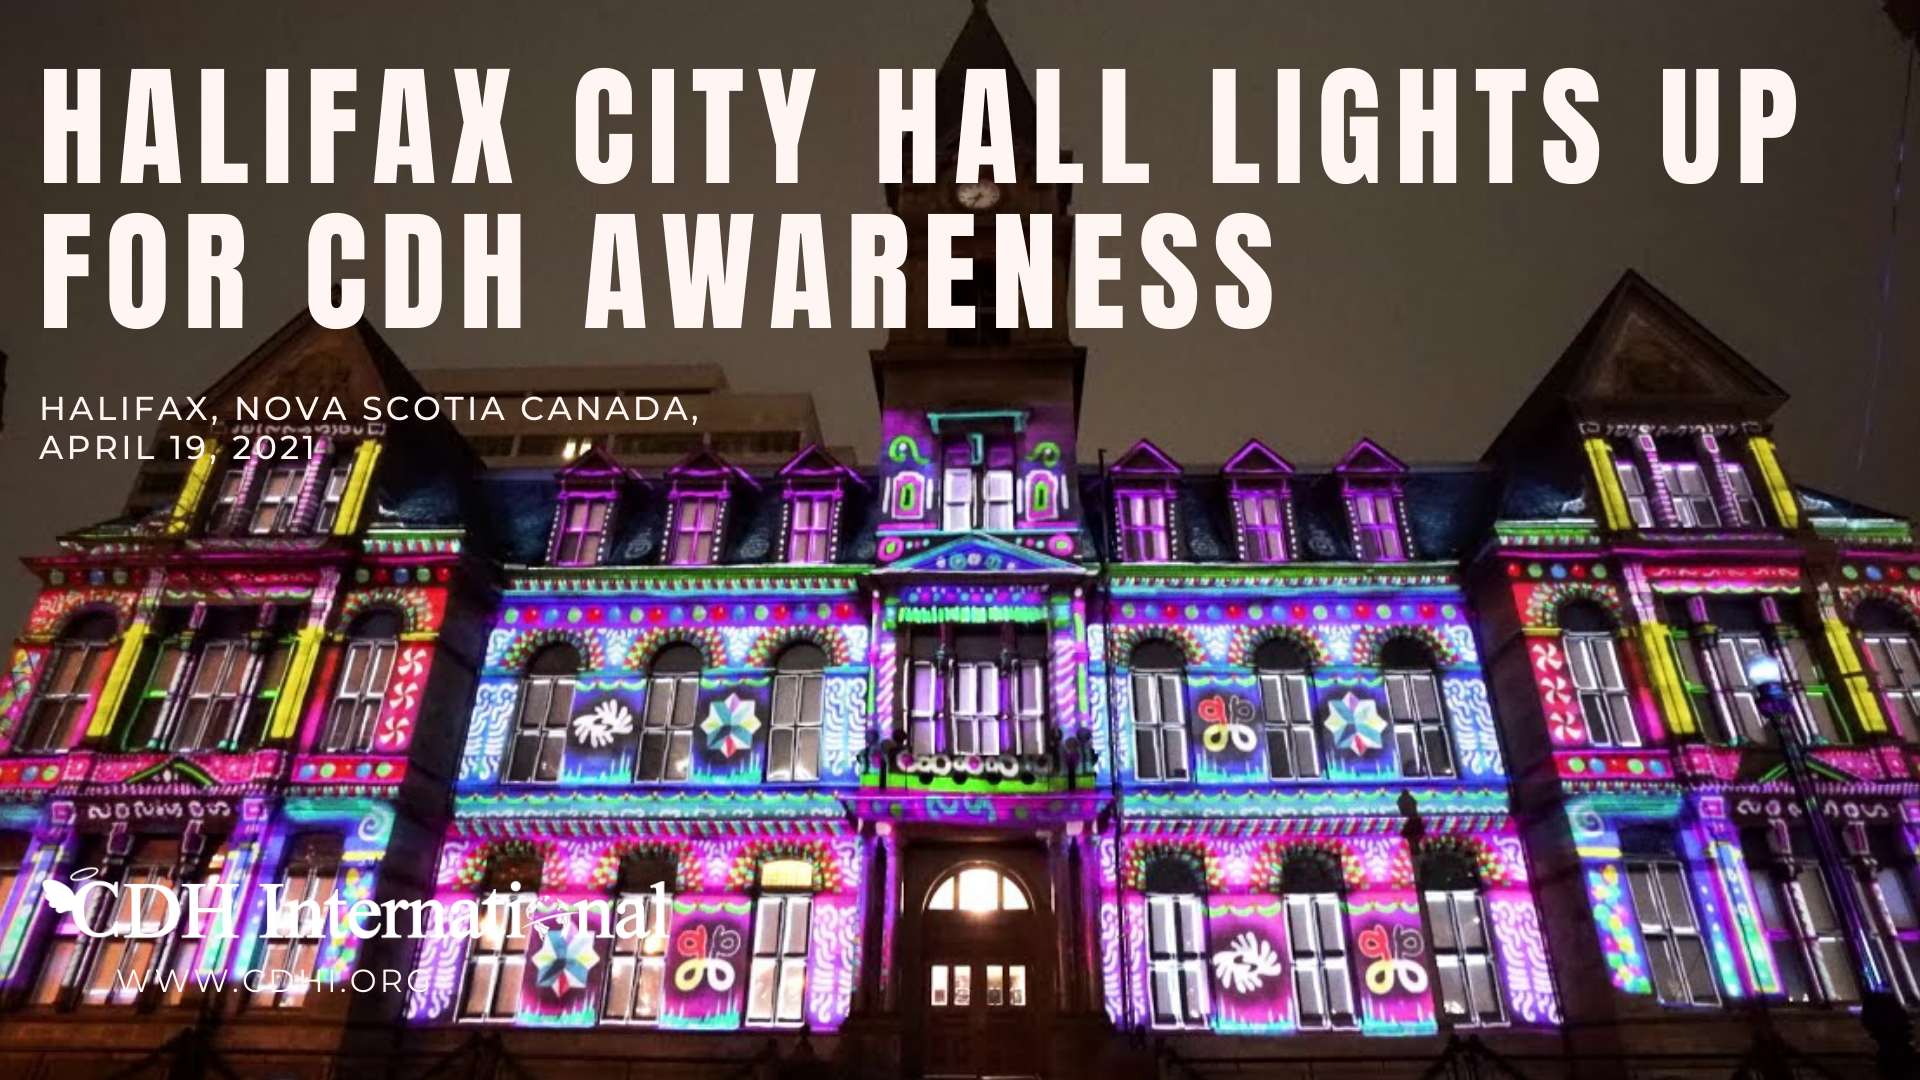 Regina City Hall Lights Up For CDH Awareness